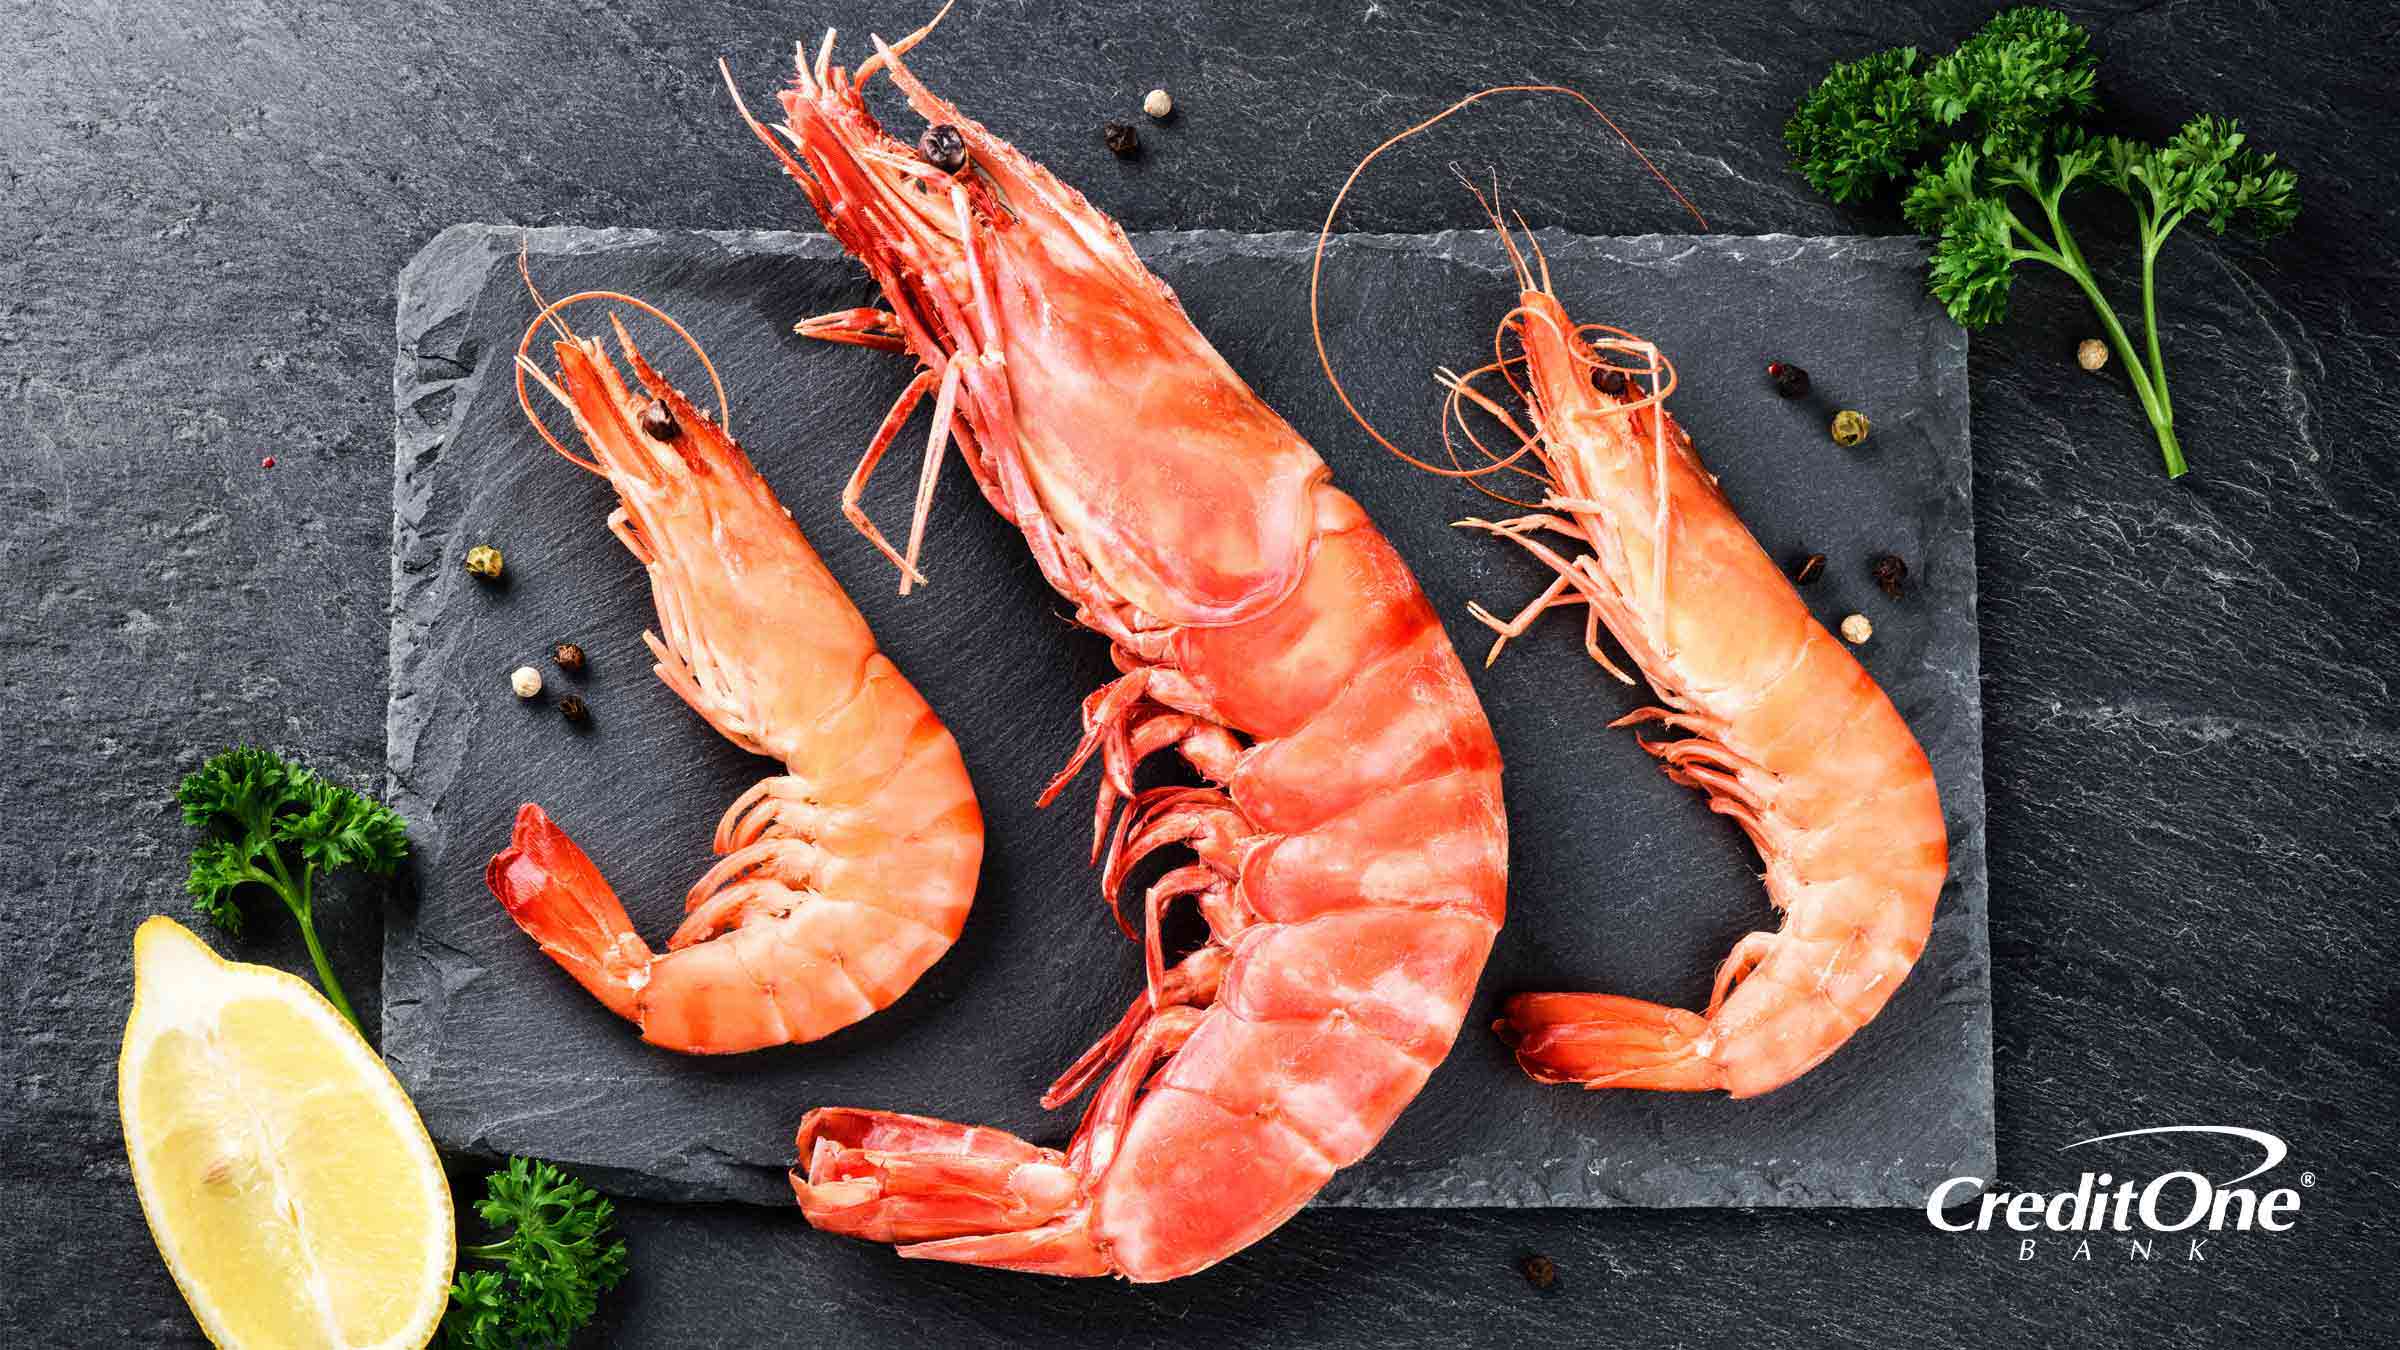 A jumbo shrimp and two regular shrimp on a slate plate